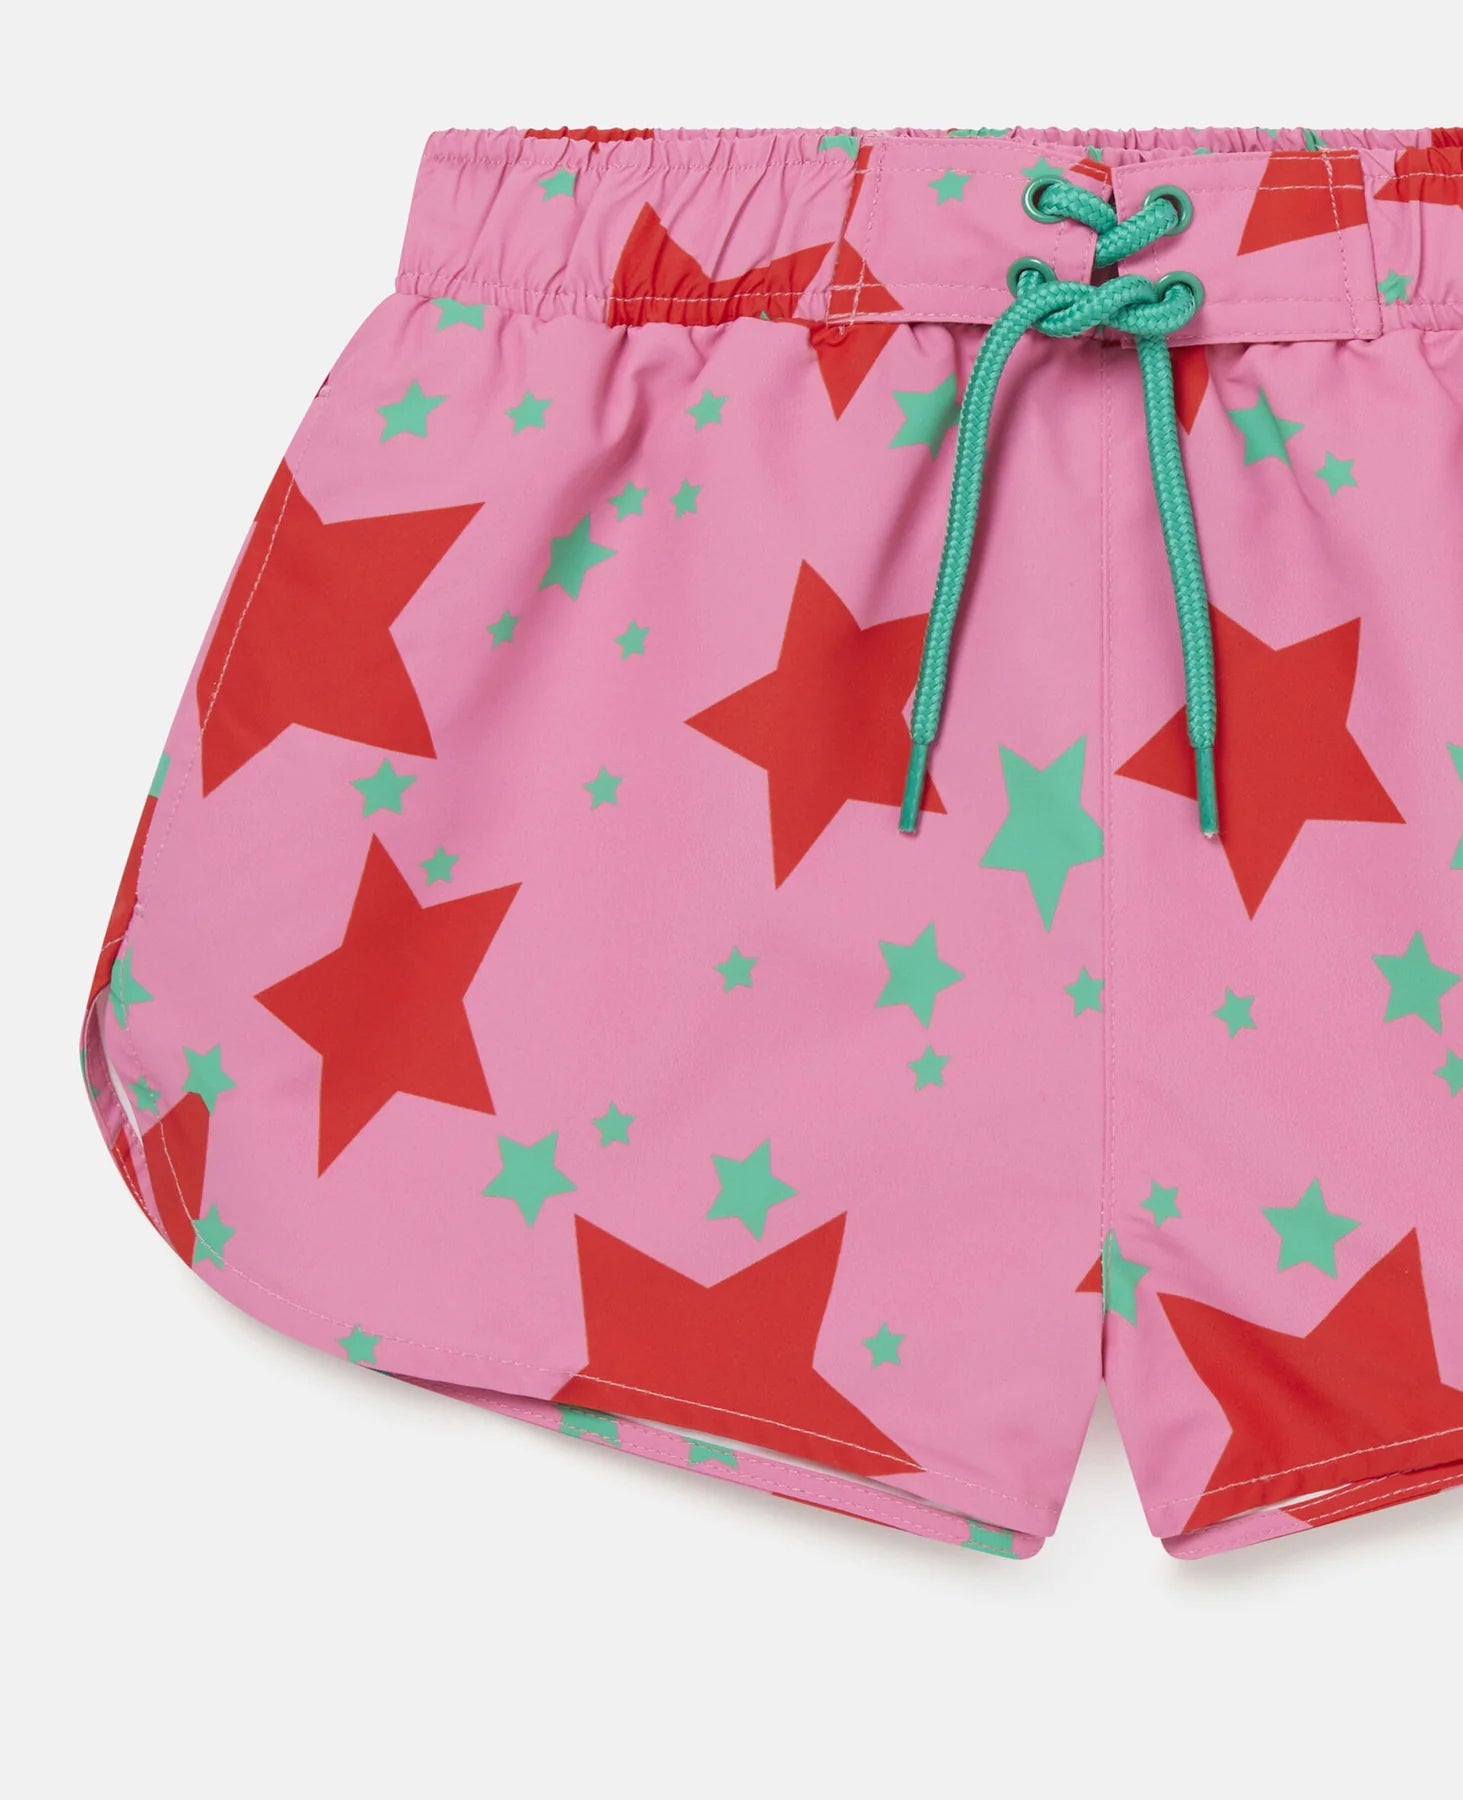 Star Swim Shorts